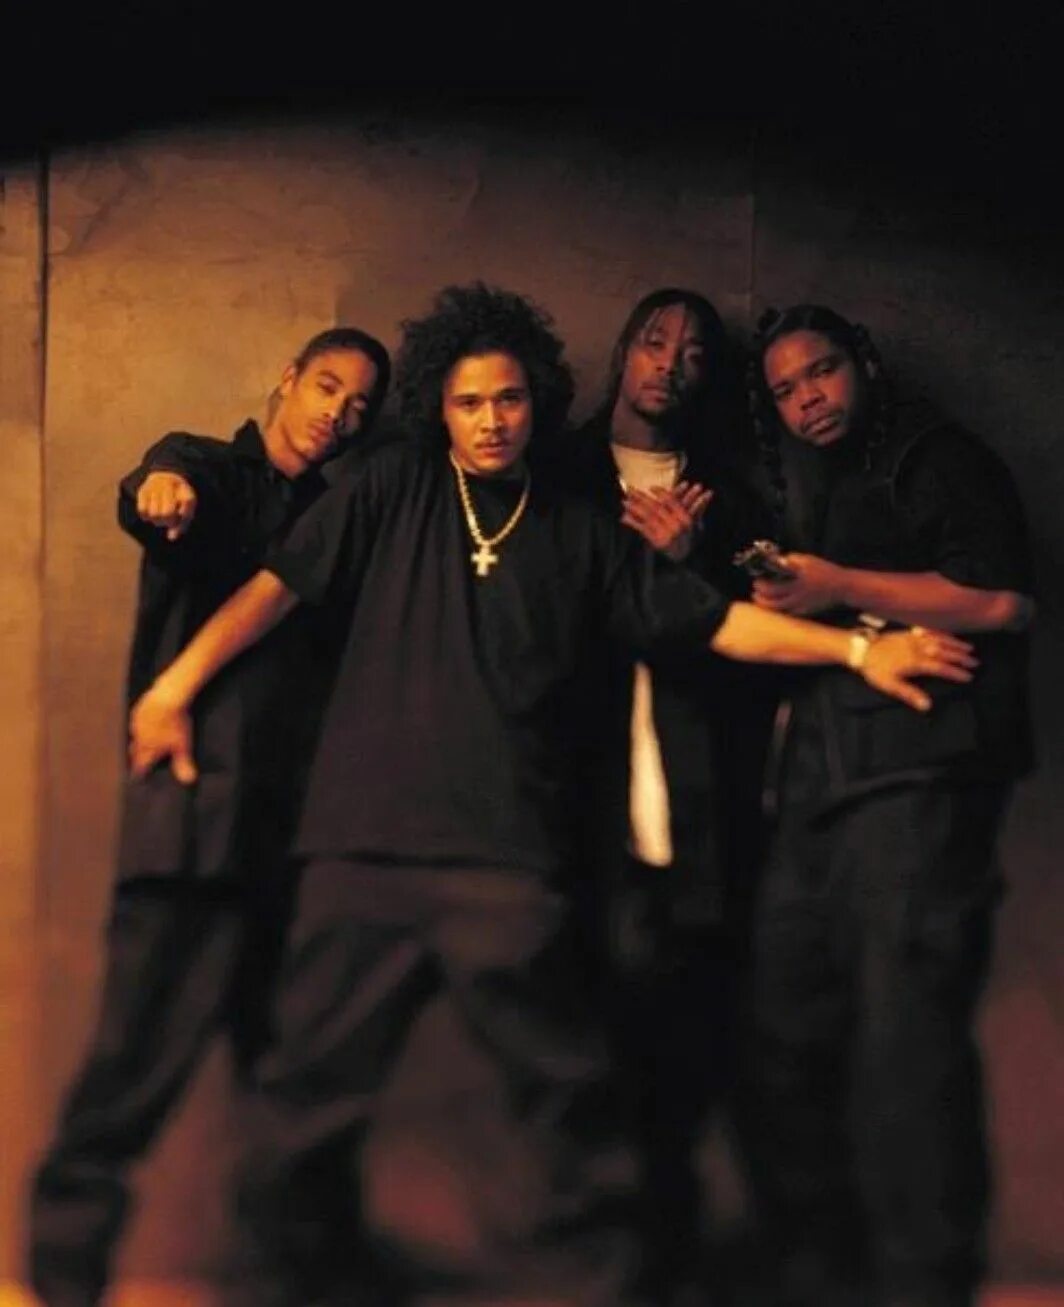 Группа Bone Thugs-n-Harmony. Bone Thugs-n-Harmony состав. Bone Thugs-n-Harmony 90s. Bone Thugs-n-Harmony 1994. Bone thugs harmony